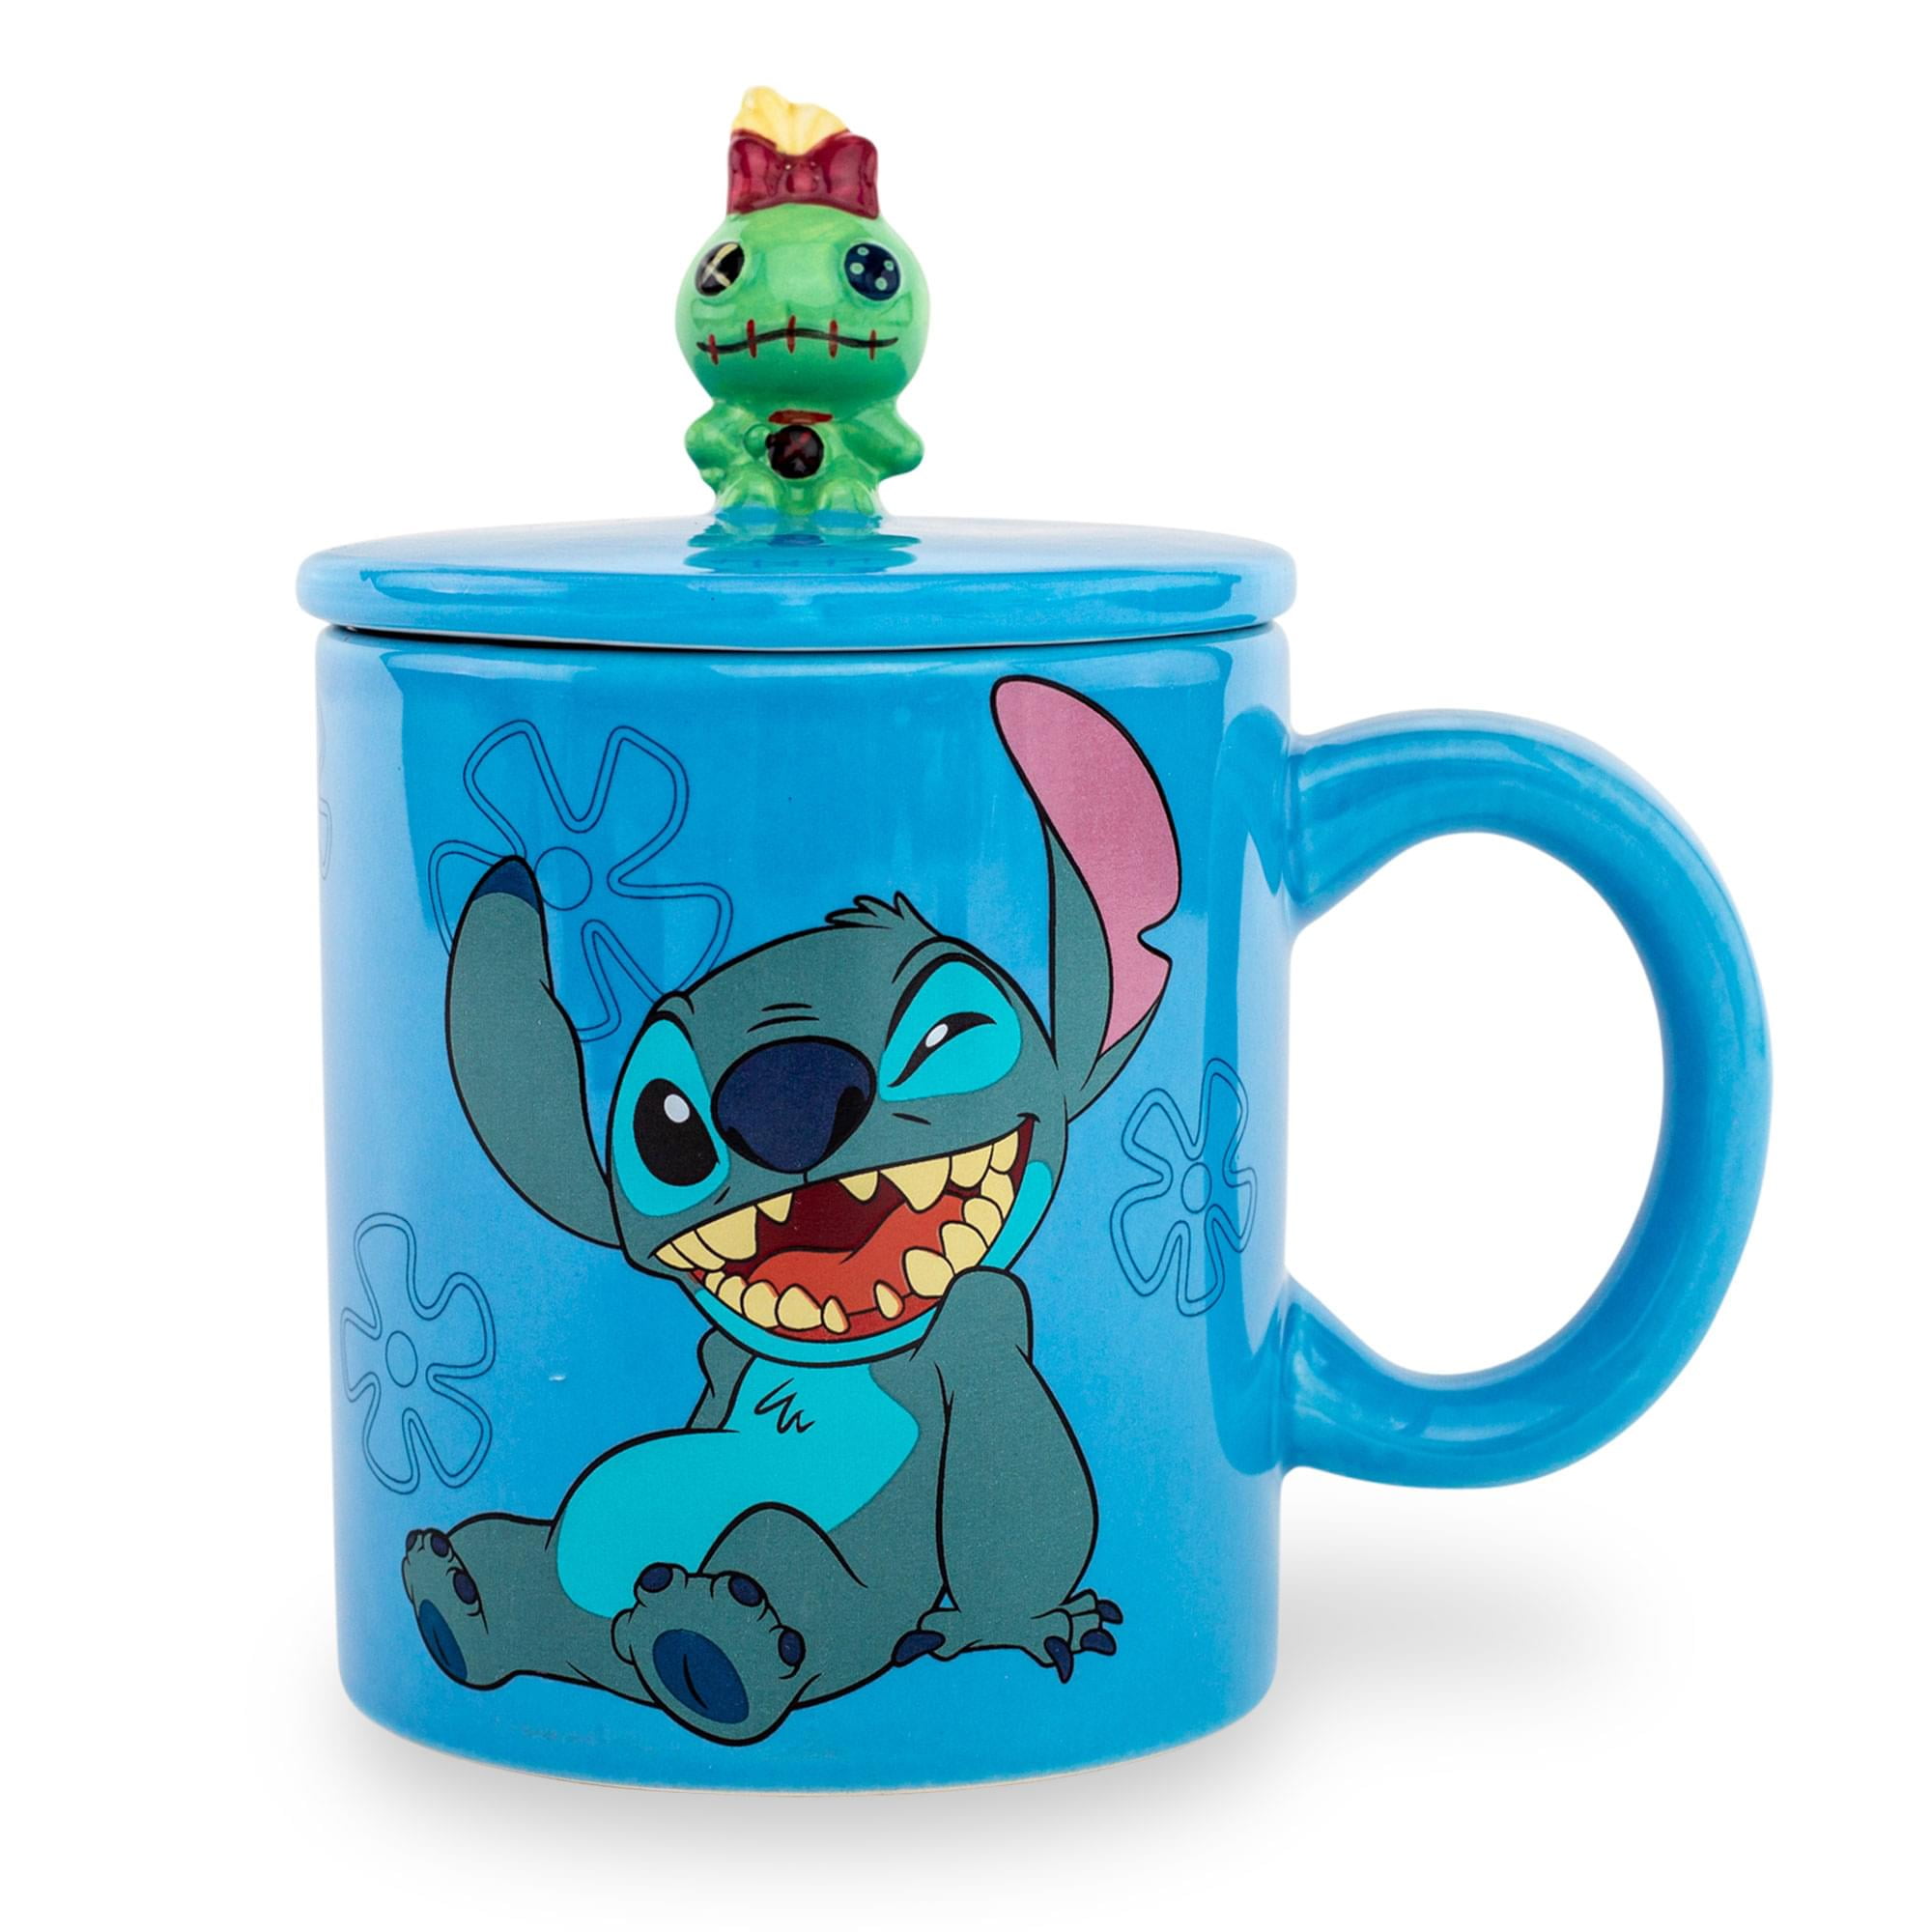 Disney Lilo & Stitch Ohana Means Family Ceramic Mug With Lid | Holds 18  Ounces